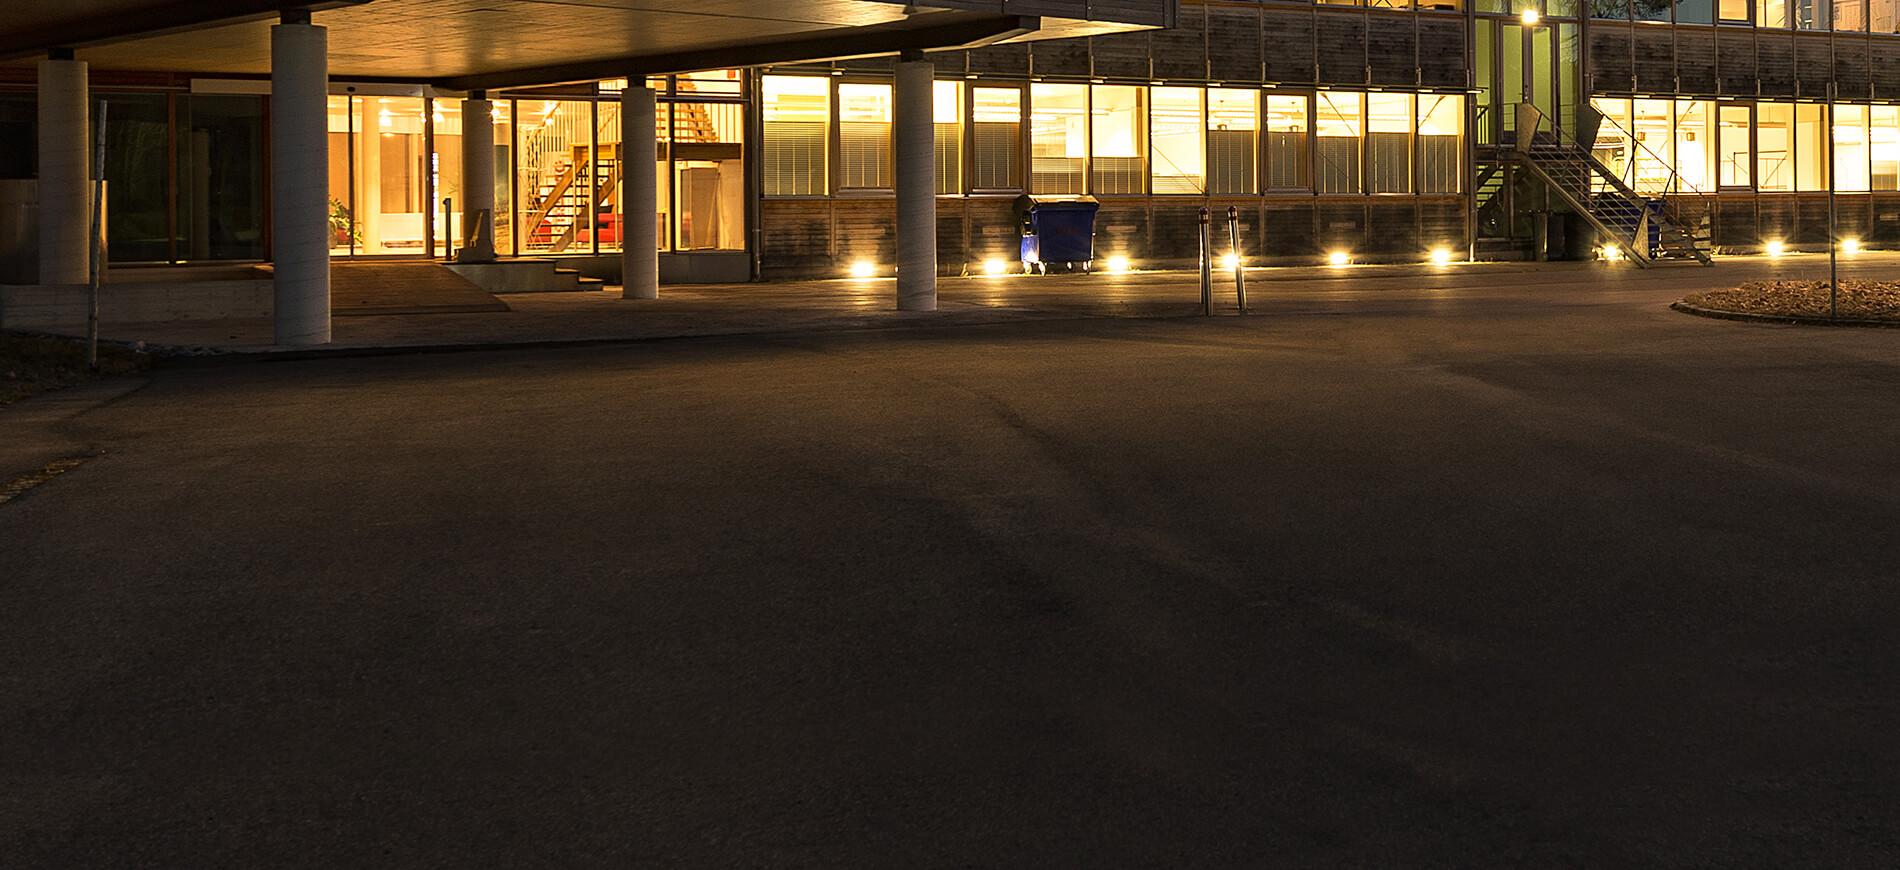 night shot of glass building